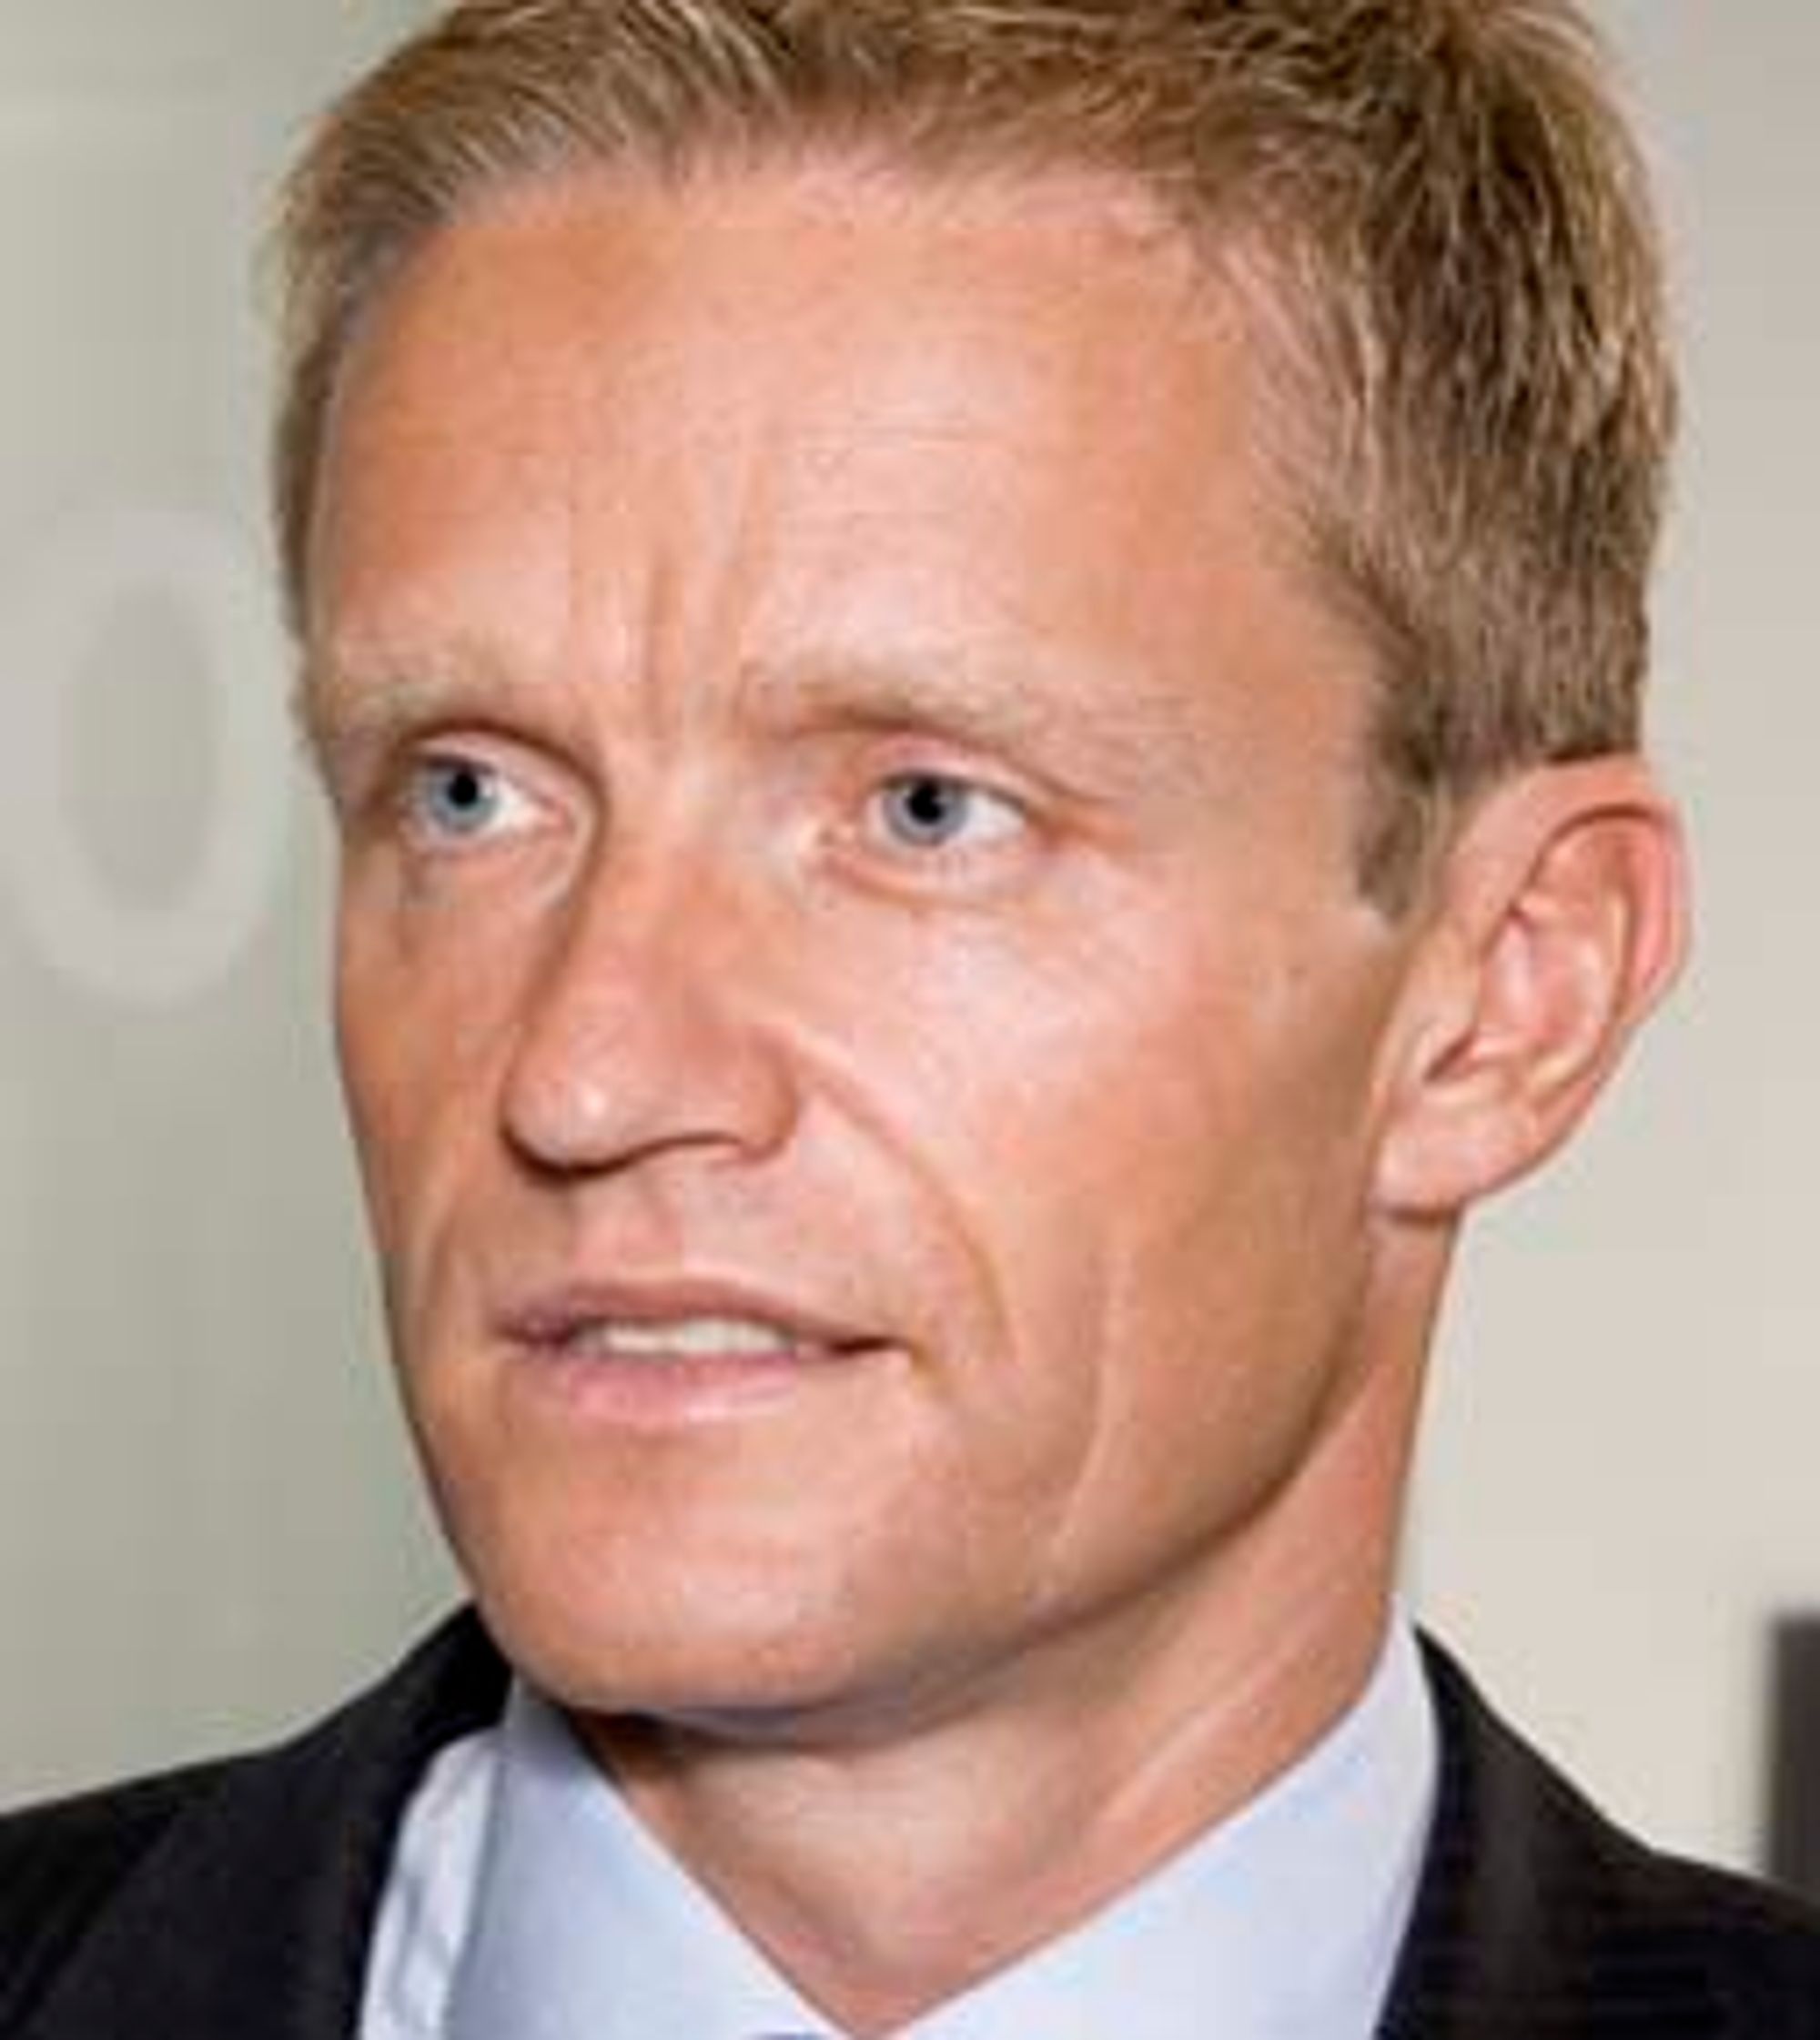  Telio-sjef Eirik Lunde mangedobler sin kundebase. 